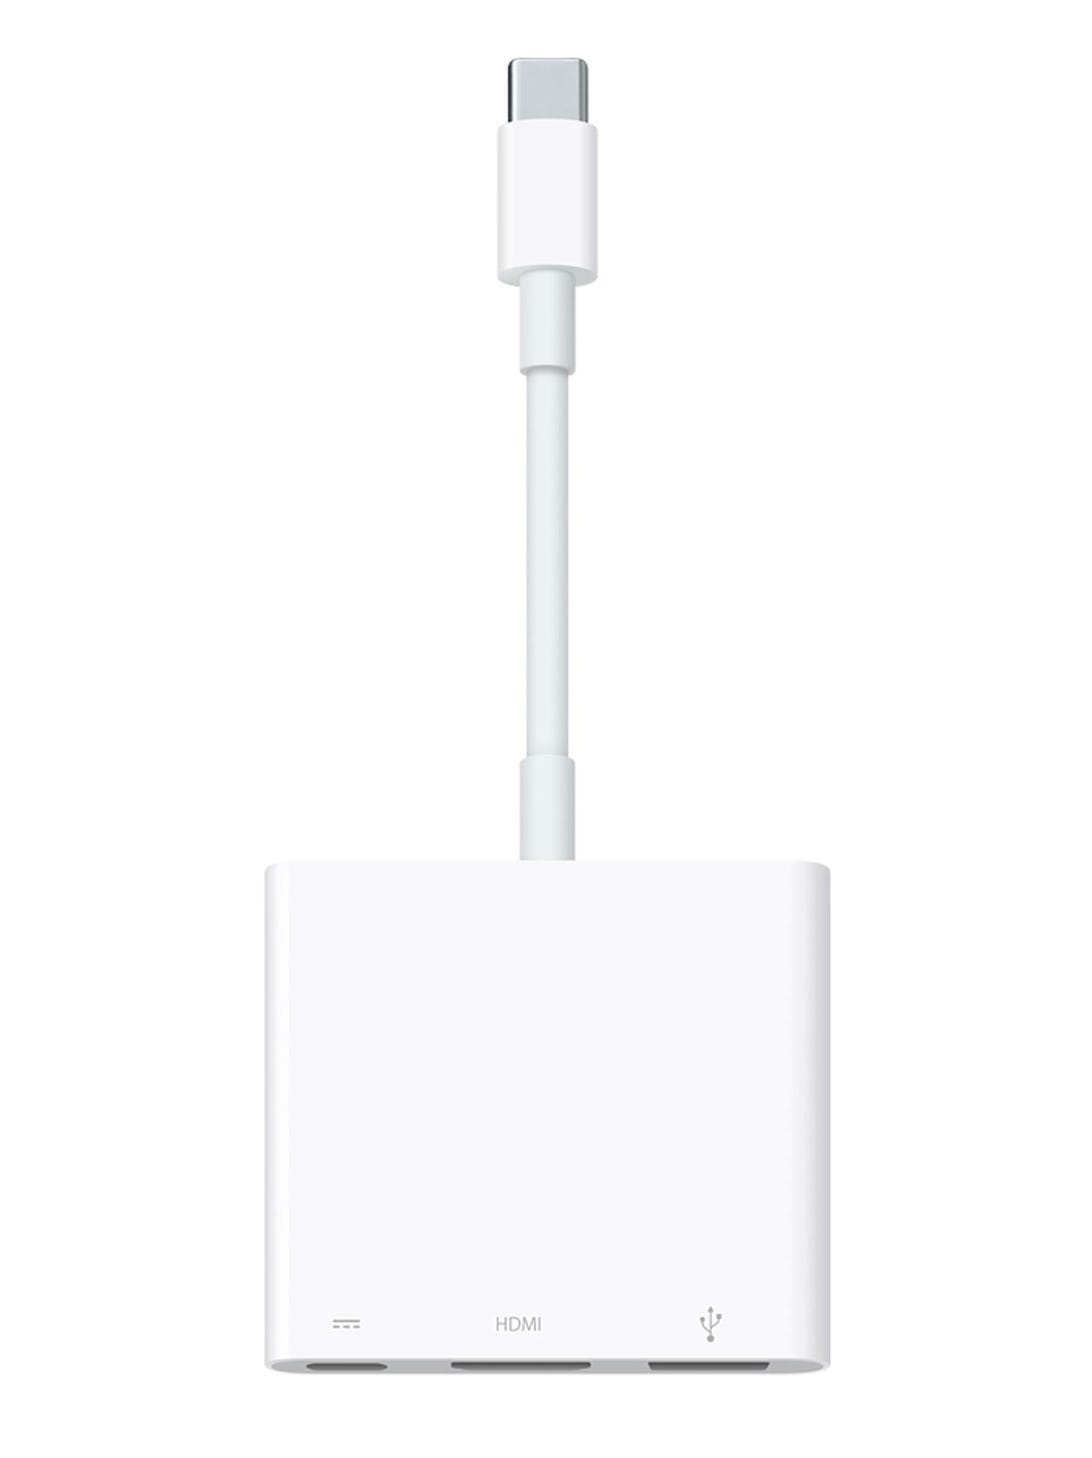 Apple updates USB-C AV adapter to better support 4K, HDMI 2.0